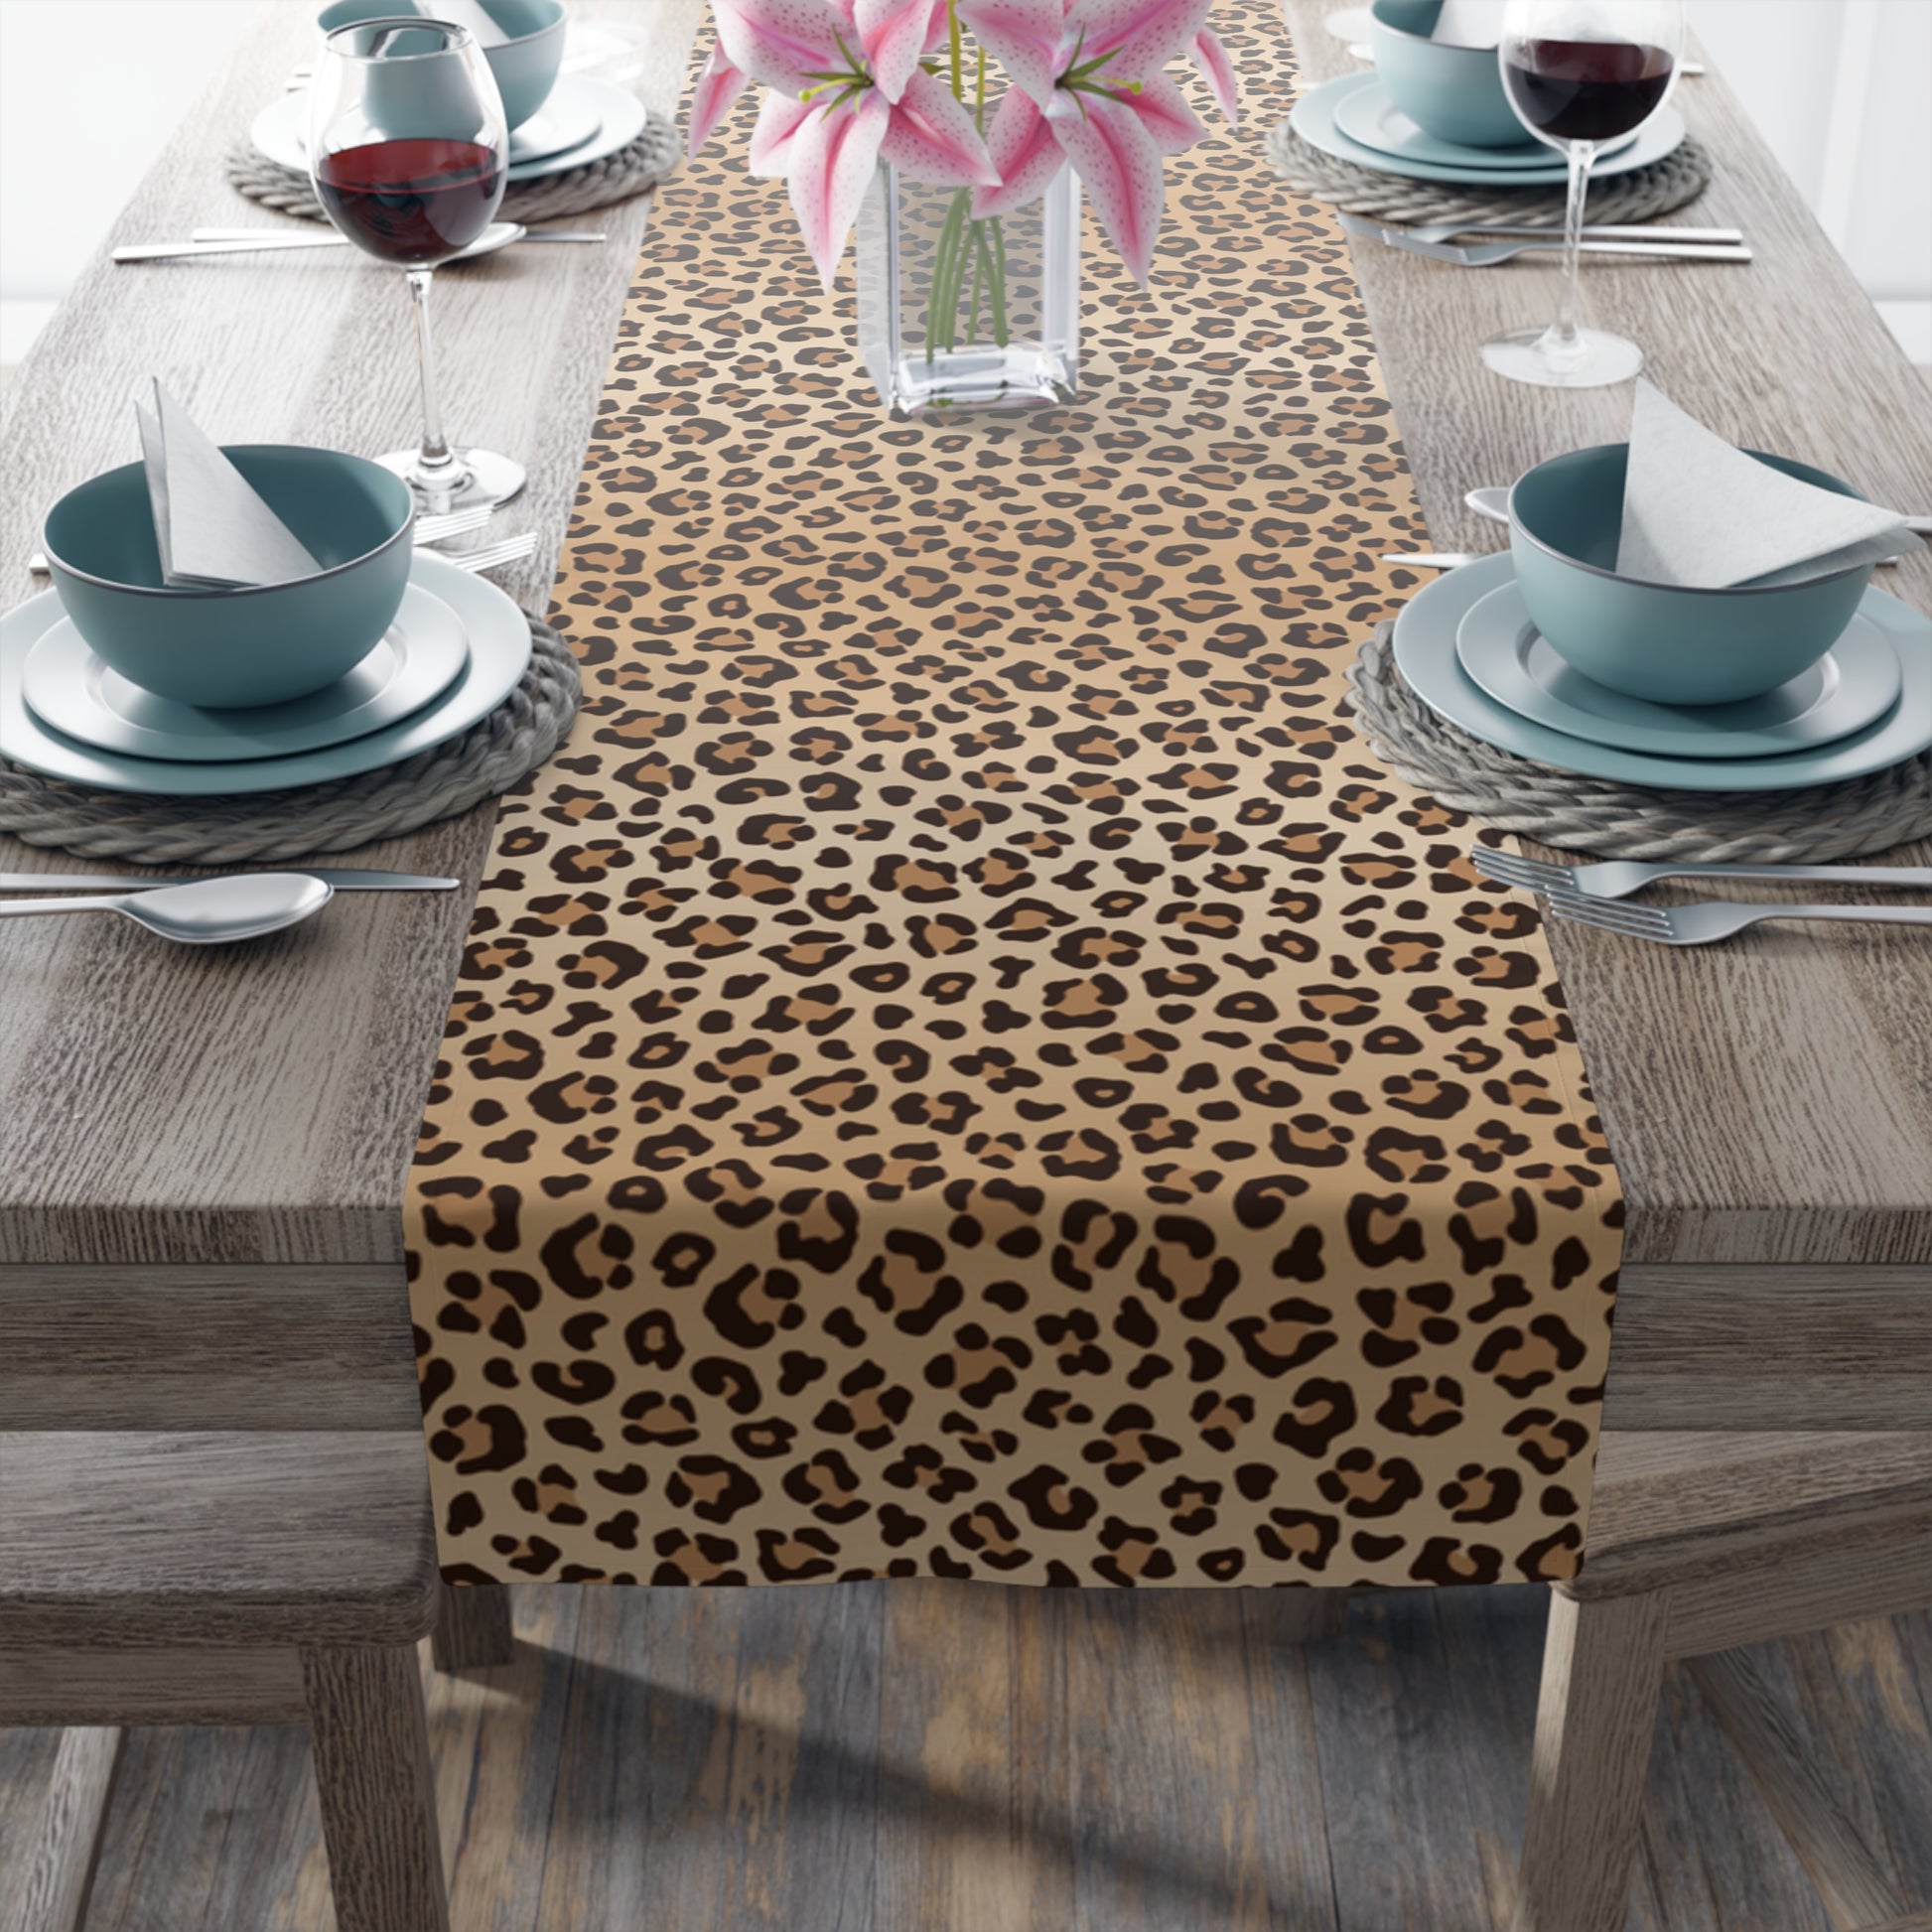 Leopard Print Table Runner / Leopard Print Decor – Farmhouse for